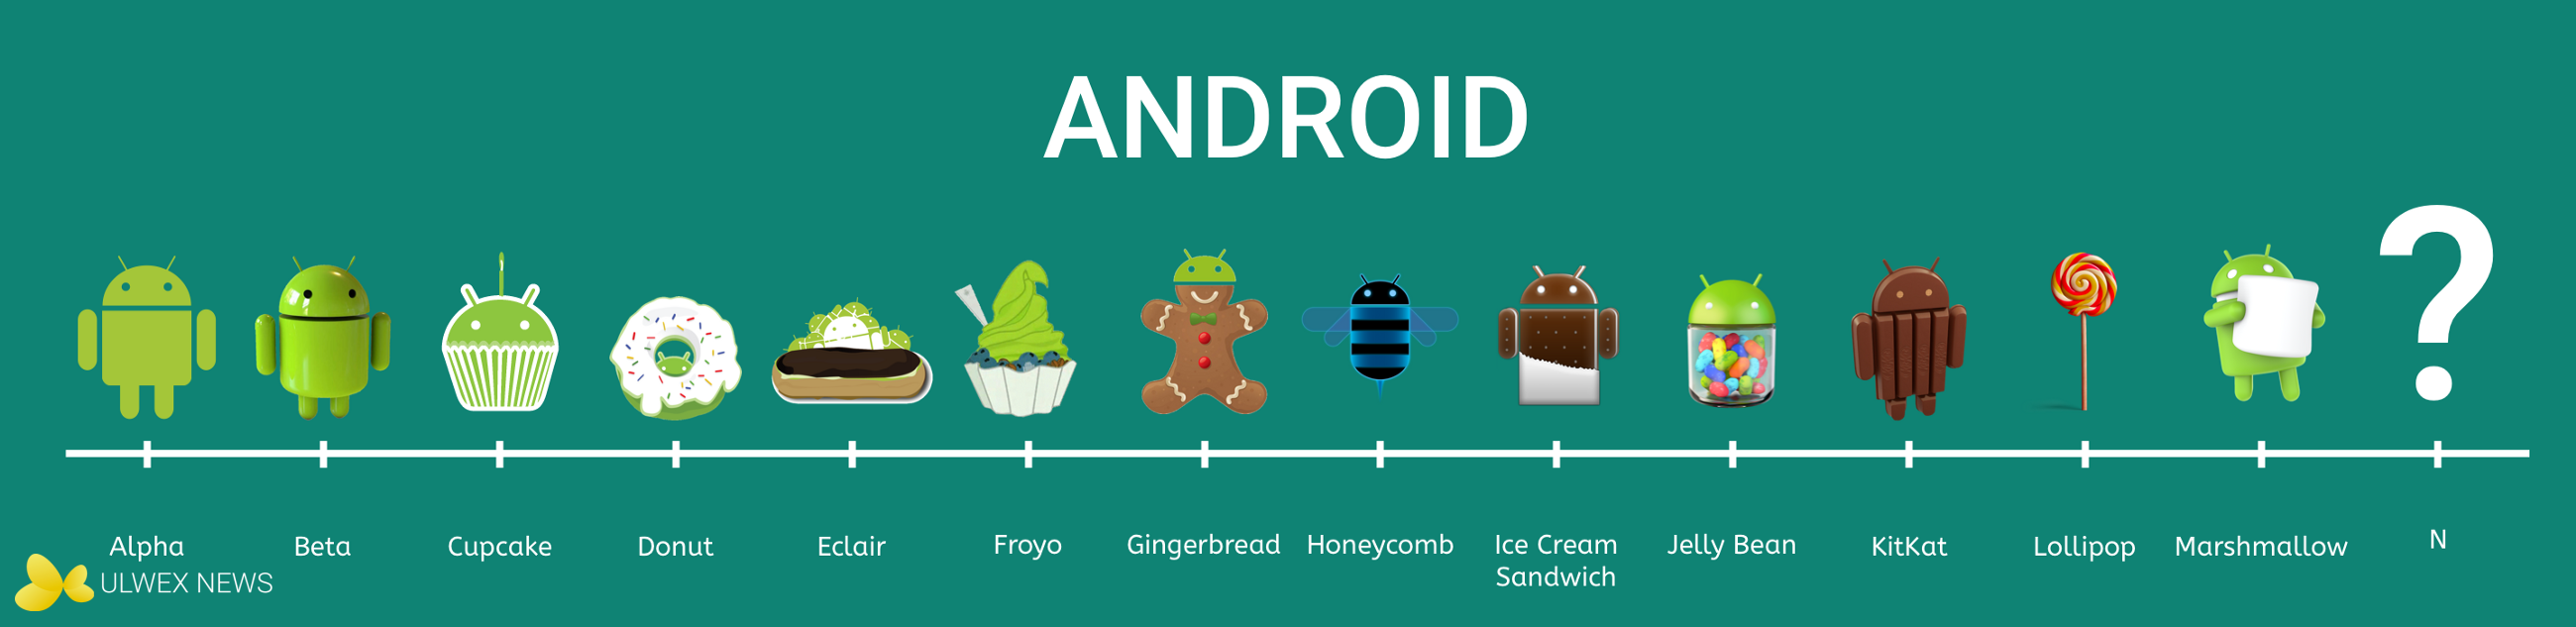 Google представил android 5.0 lollipop - обзор ос